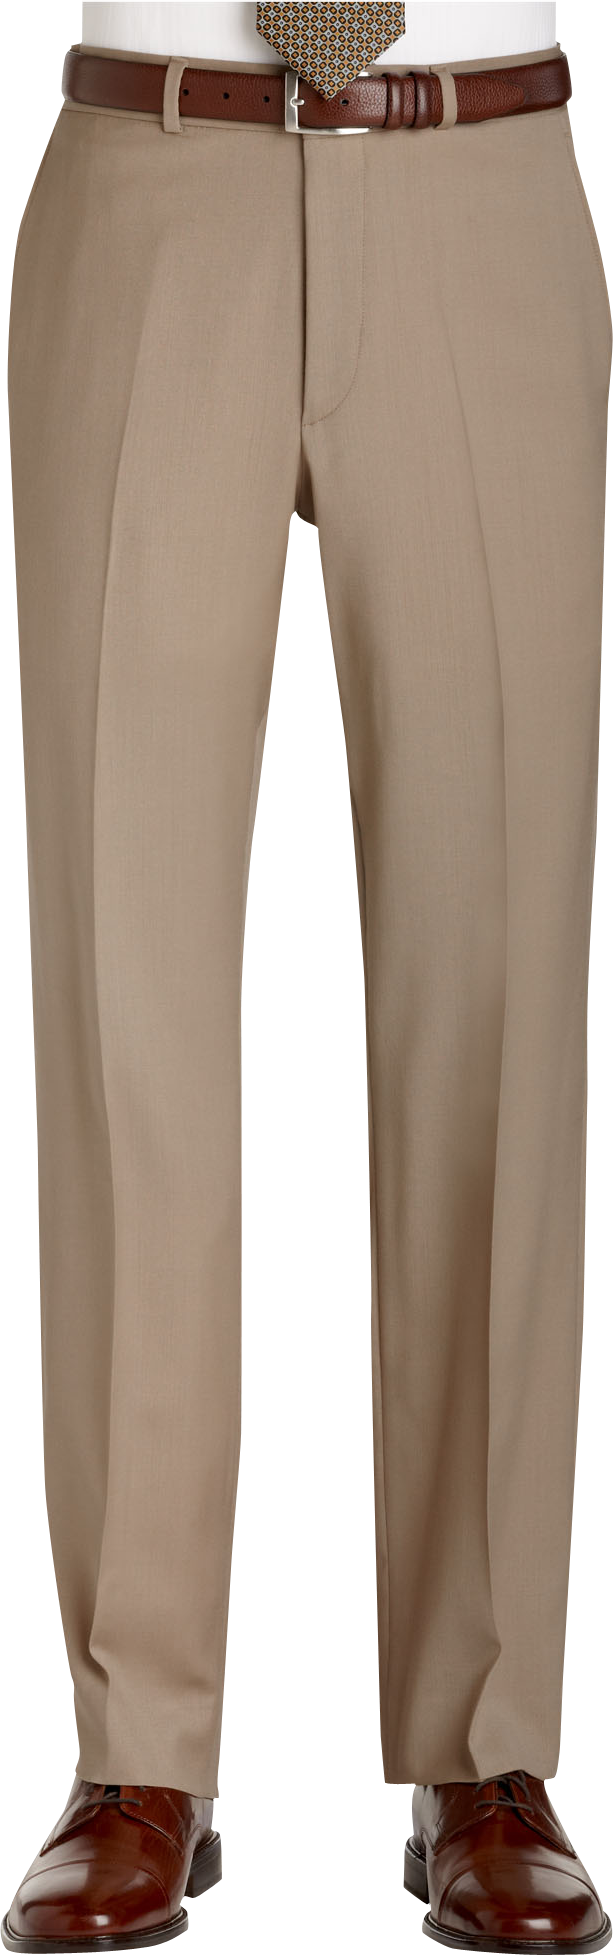 Light Brown Dress Pants | Pant So